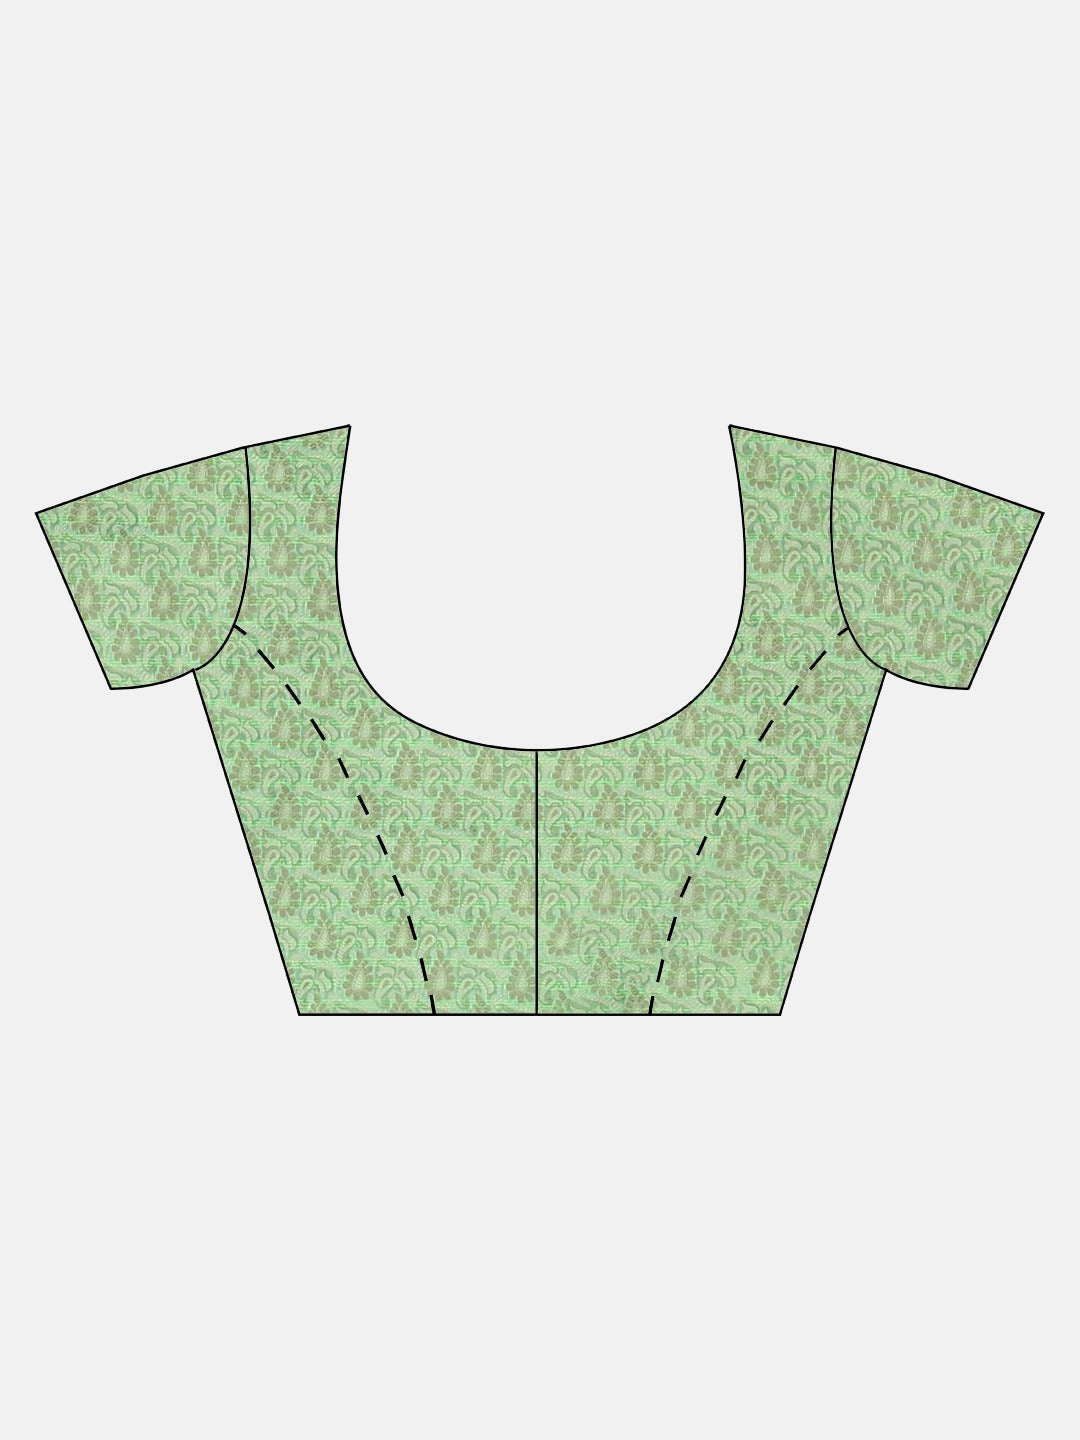 Neerus Green Color Silk Cotton Fabric Saree, With Blouse Piece